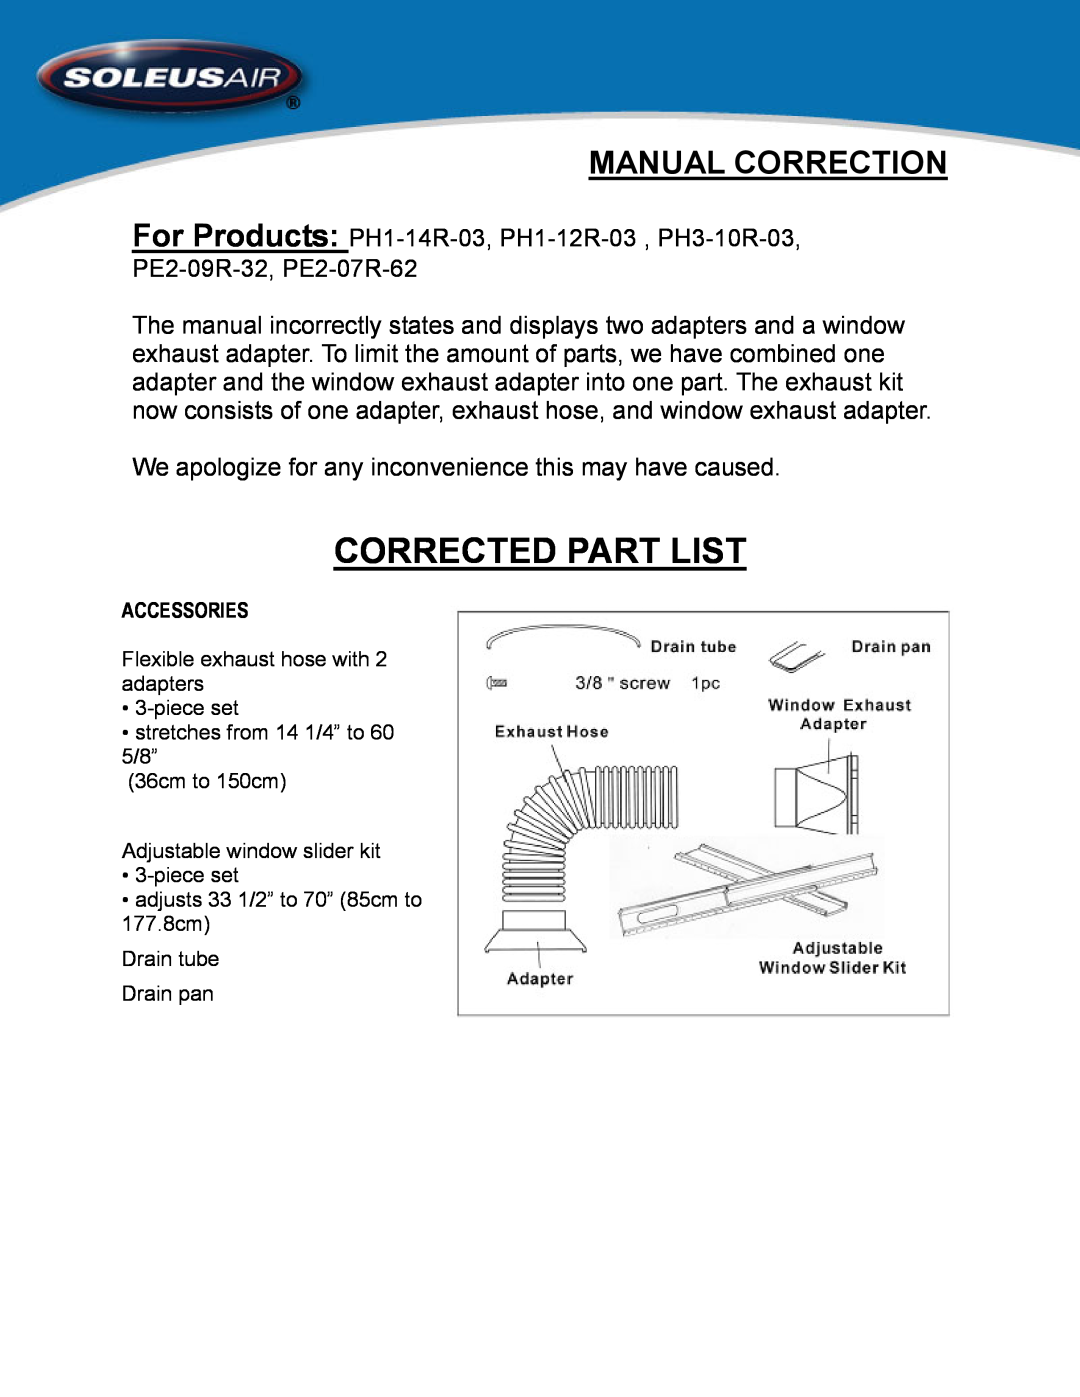 Soleus Air PH1-12R-03, PH3-10R-03, PH1-14R-03, PE2-07R-62, PE2-09R-32 manual Corrected Part List, Manual Correction 